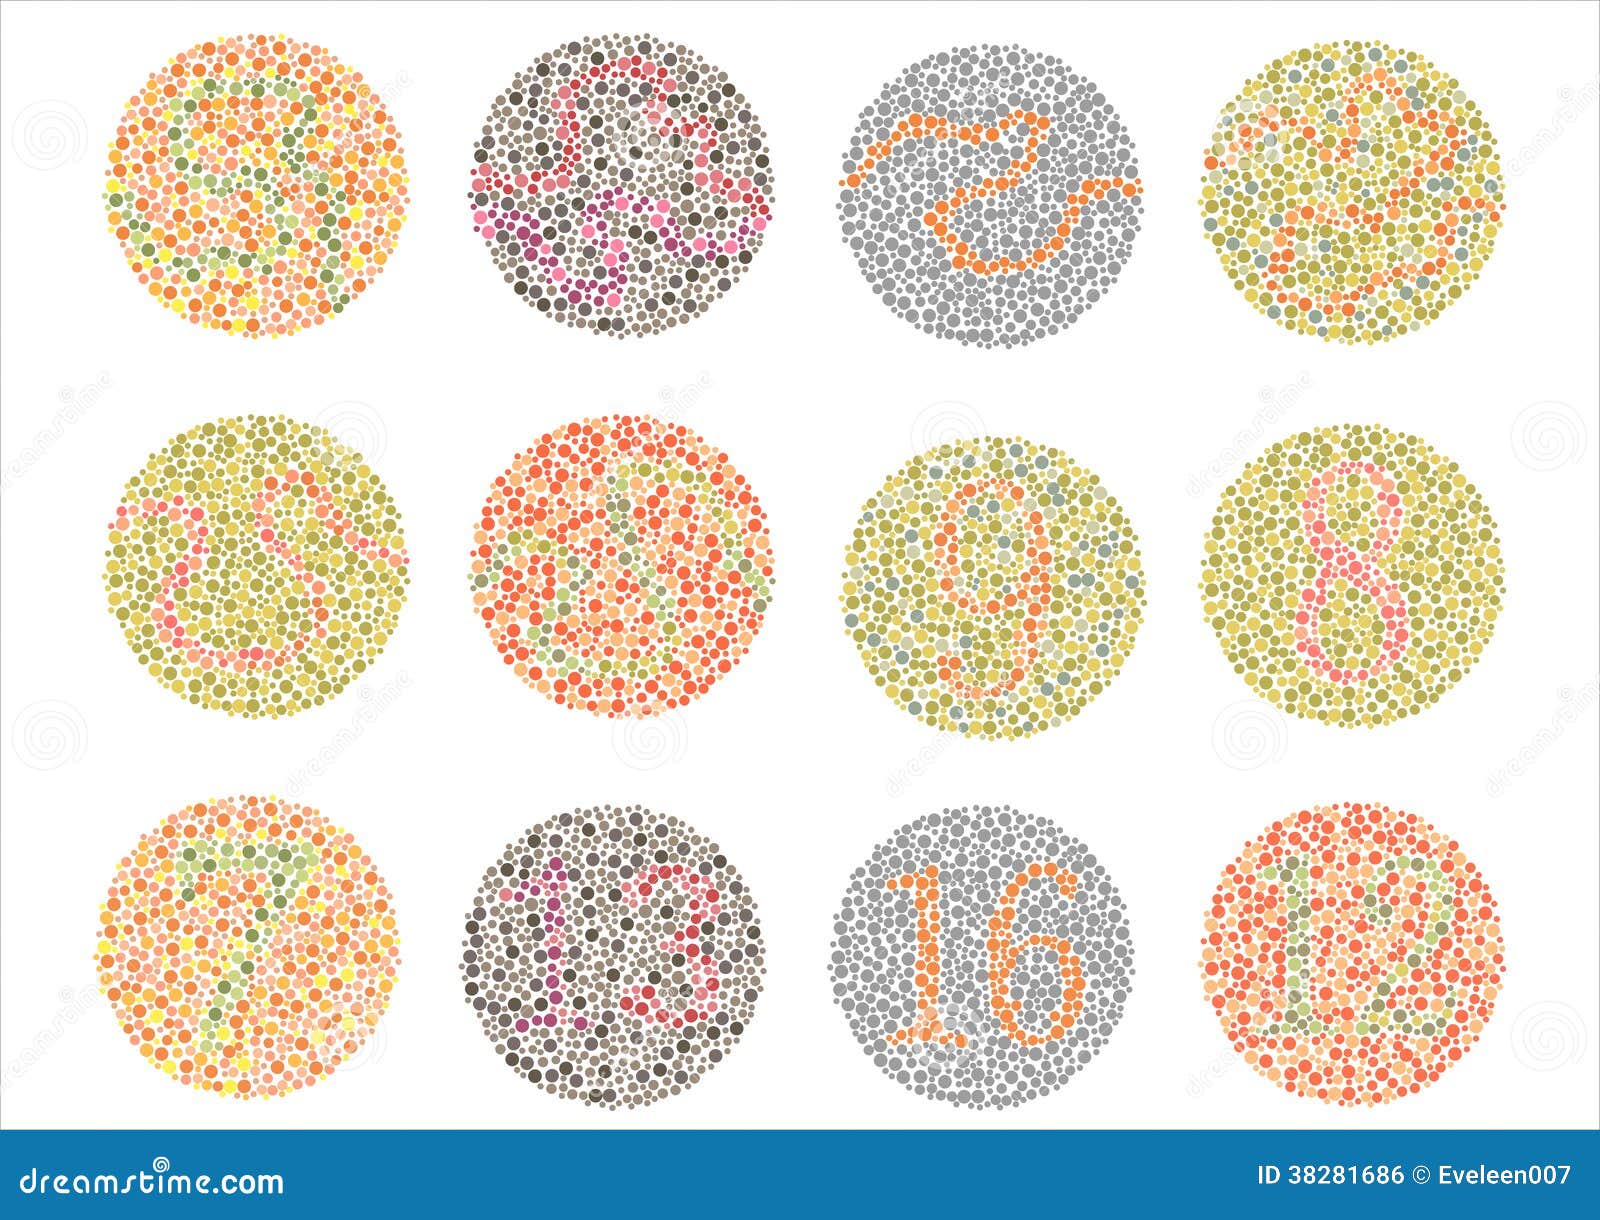 ishihara test. , color blindness disease.